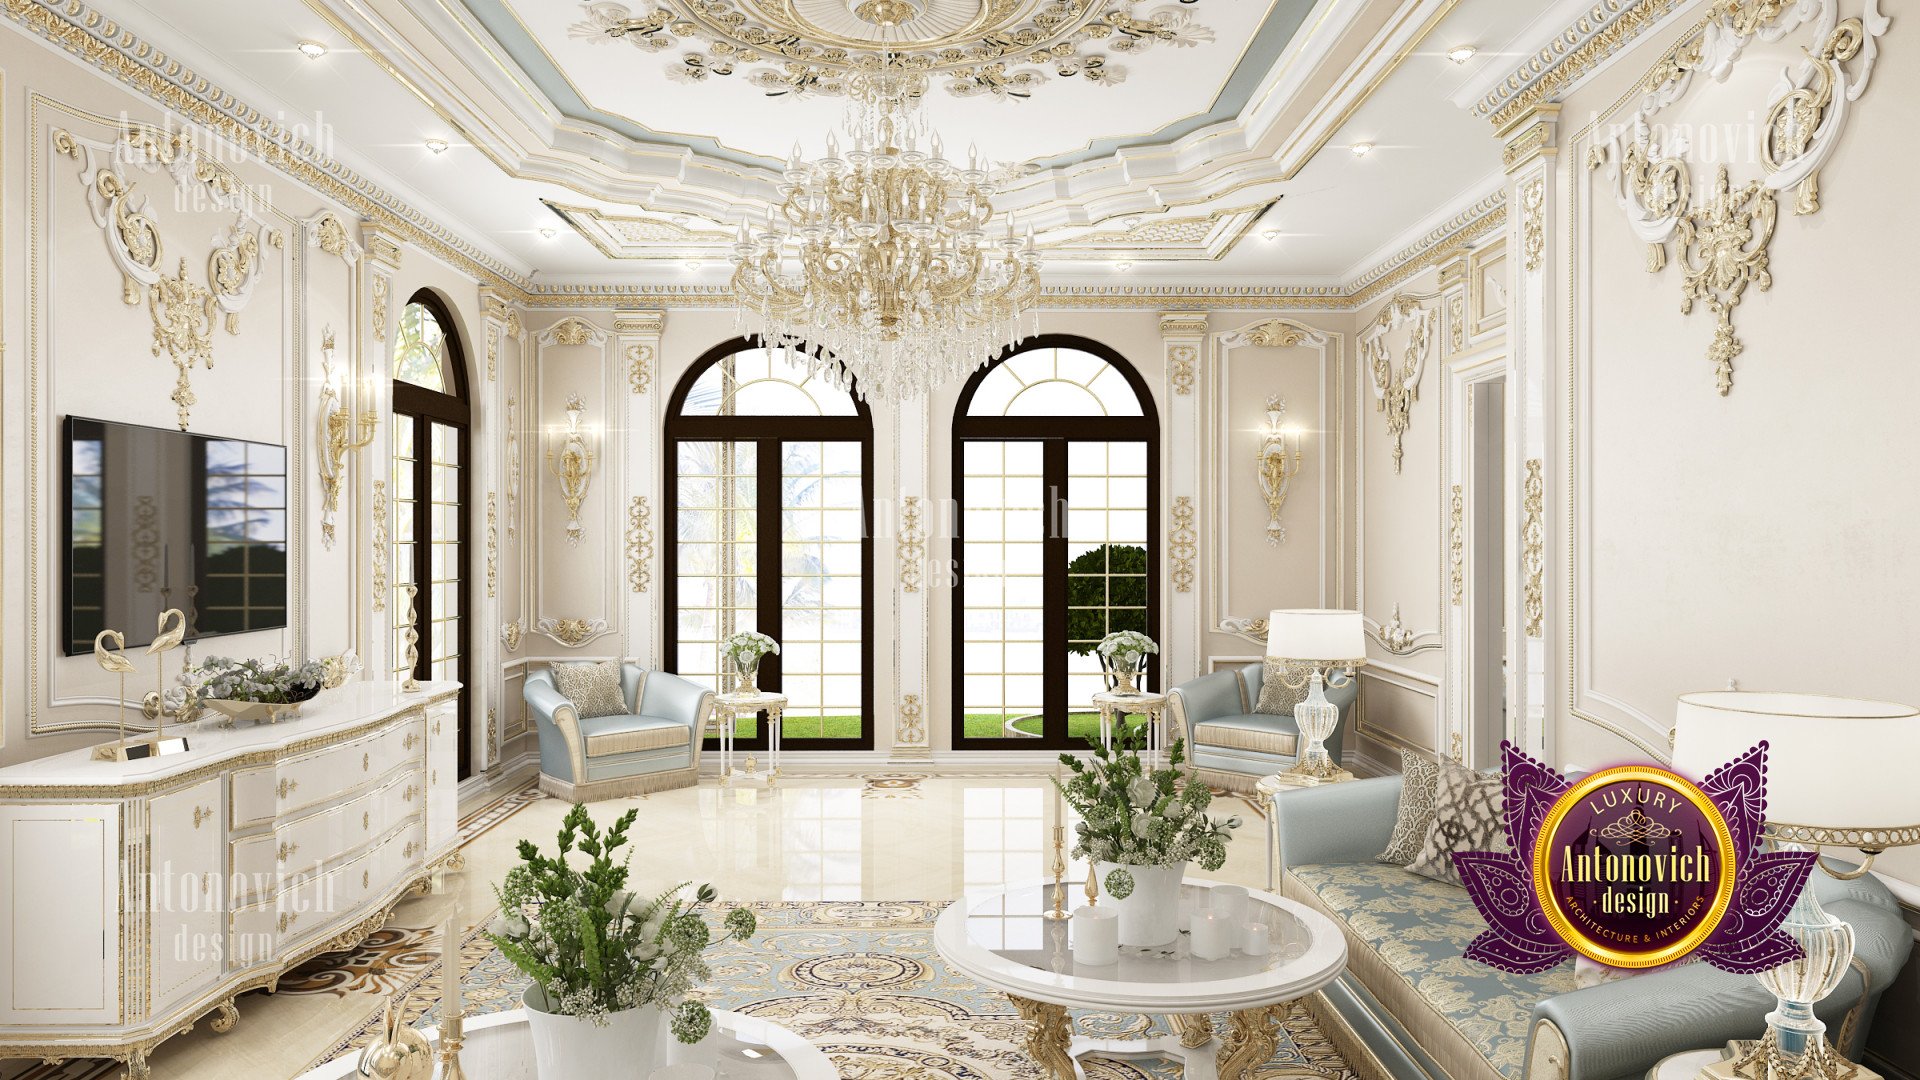 Very beautiful living room interior